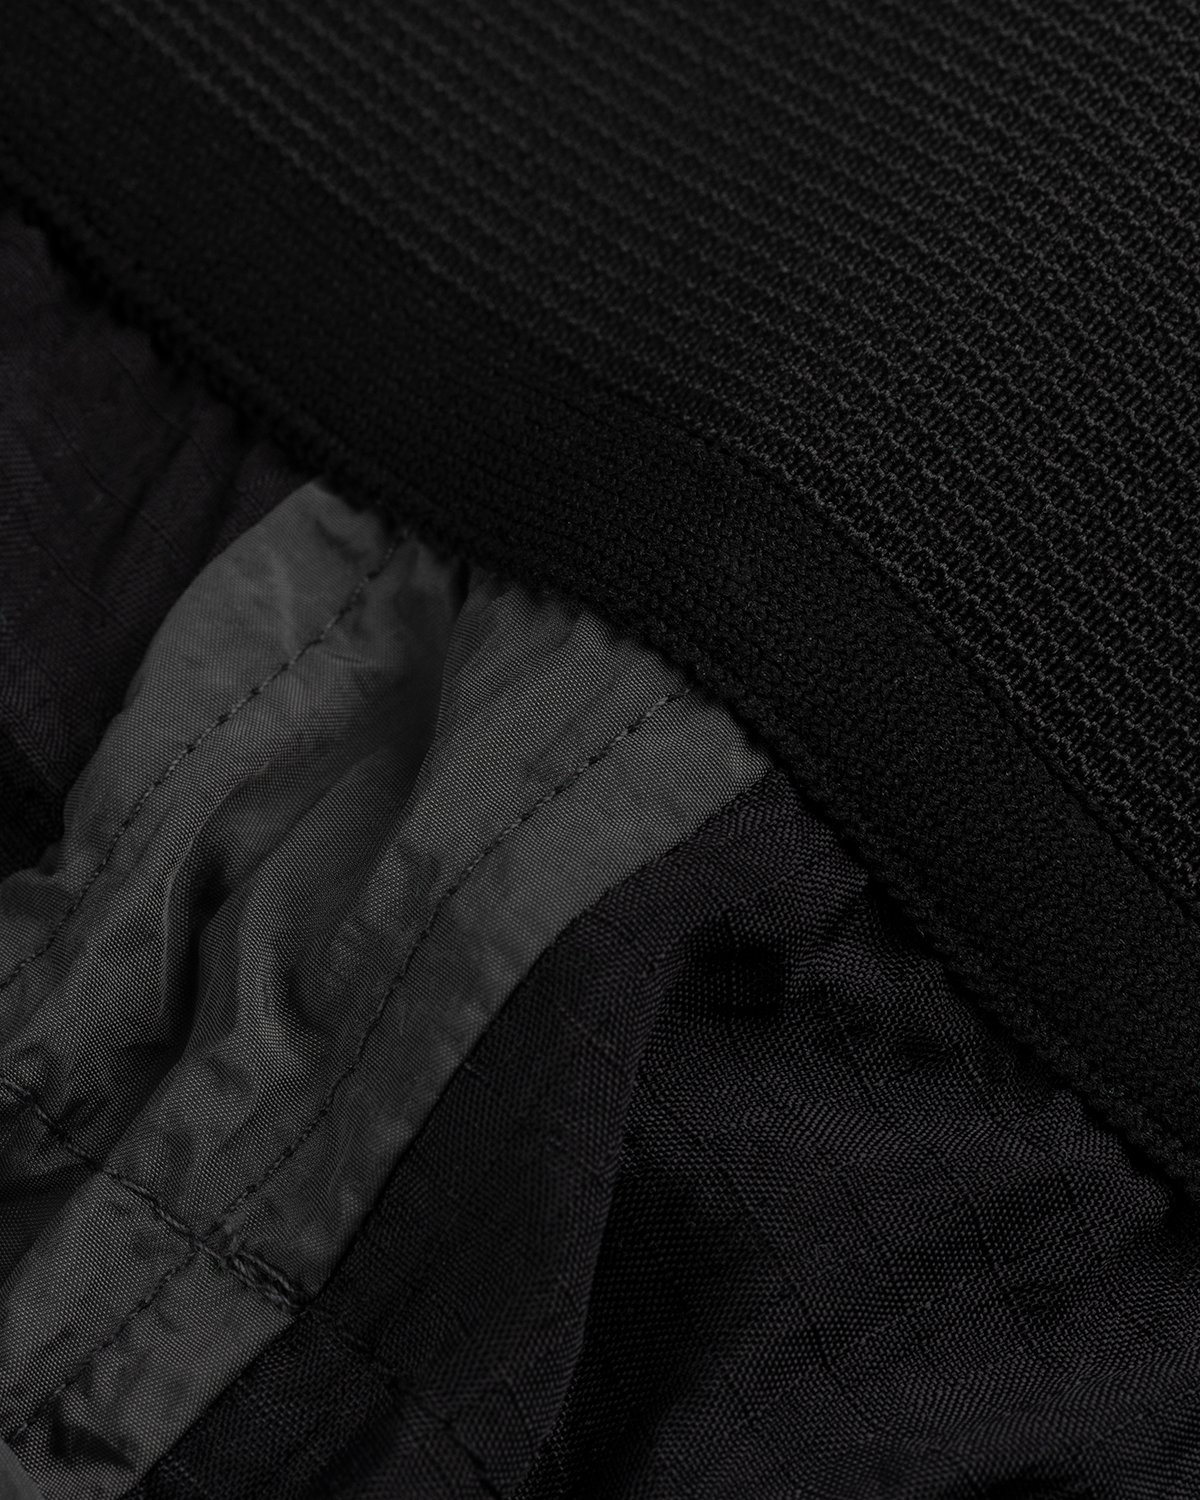 Arnar Mar Jonsson – Oroi Paneled Trouser Black/Charcoal - Work Pants - Brown - Image 7